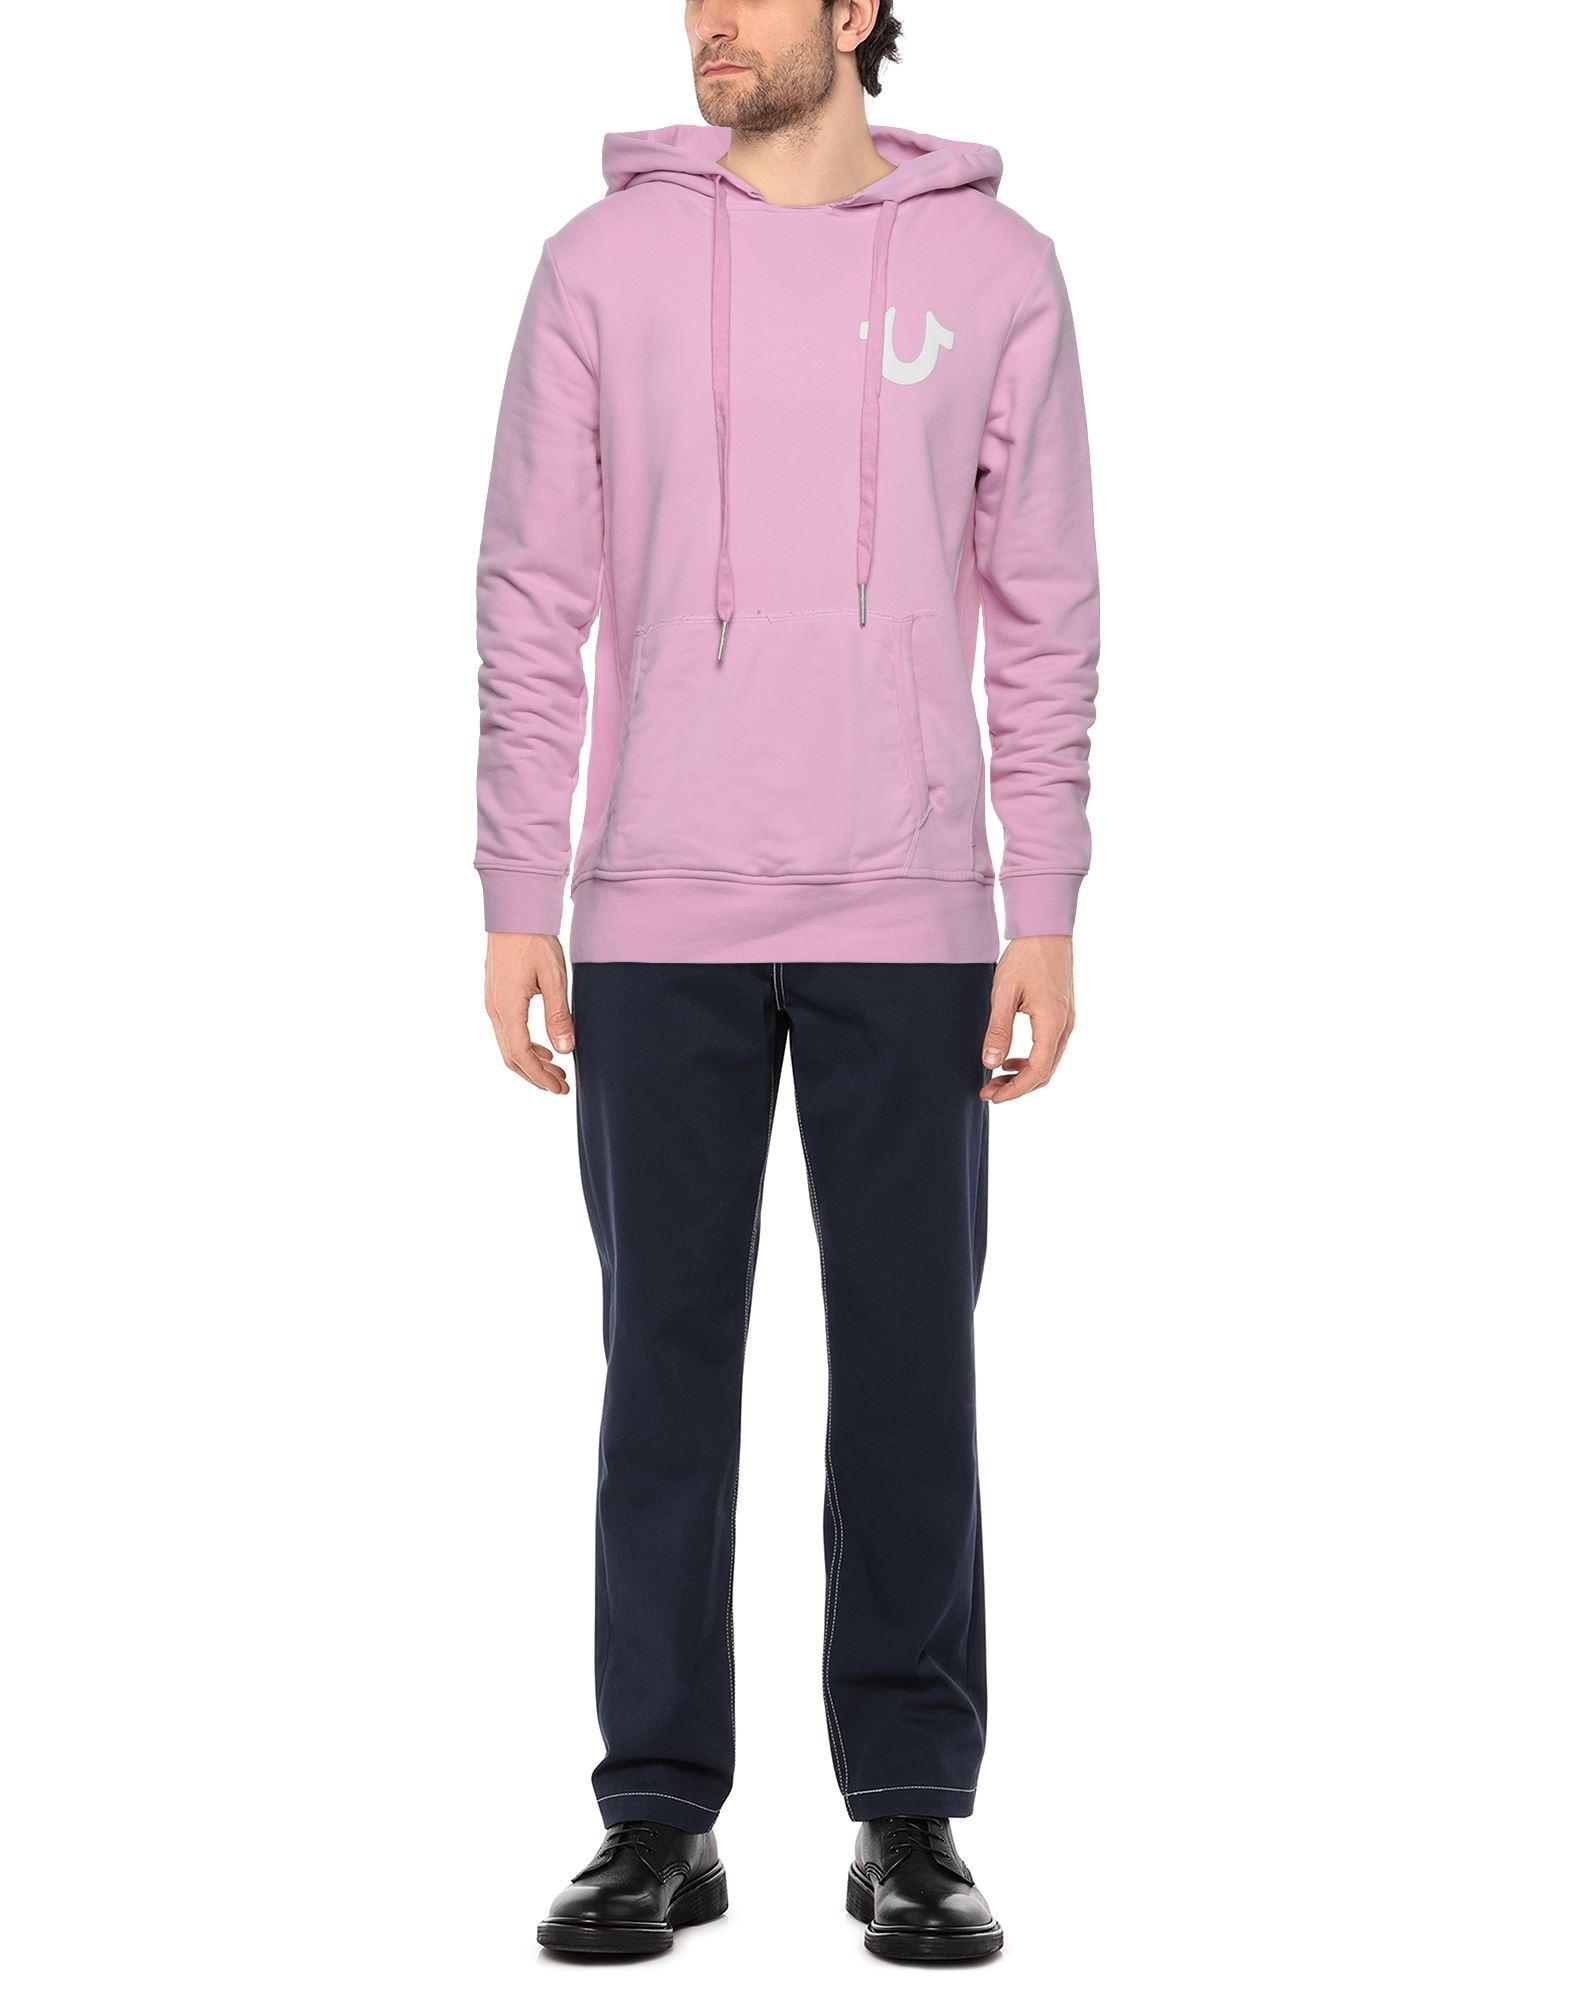 Fashion Sweats Sweatshirts True Religion Sweat Shirt pink athletic style 